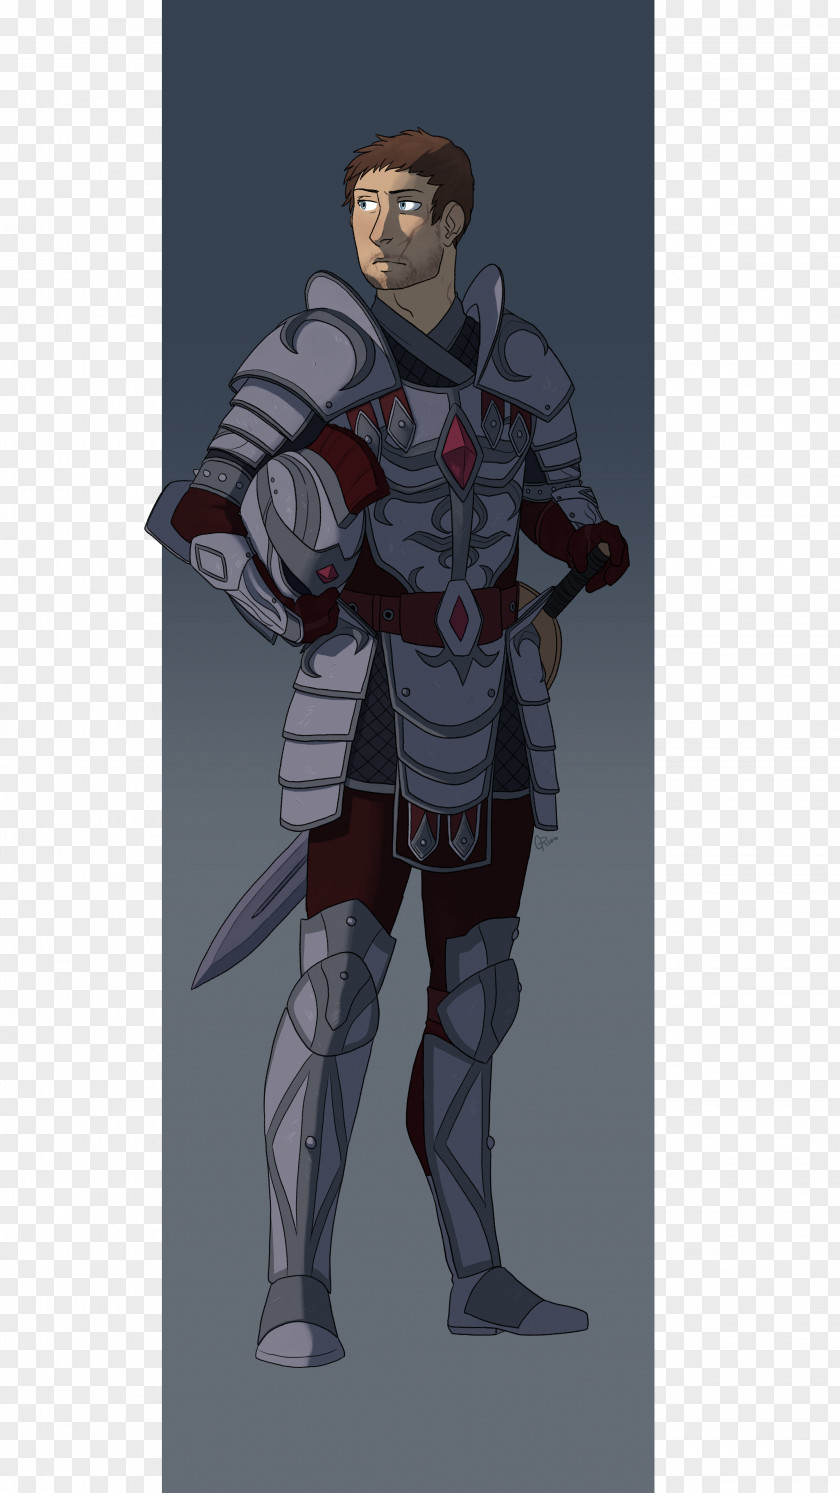 Knight Costume Design Armour Cartoon PNG